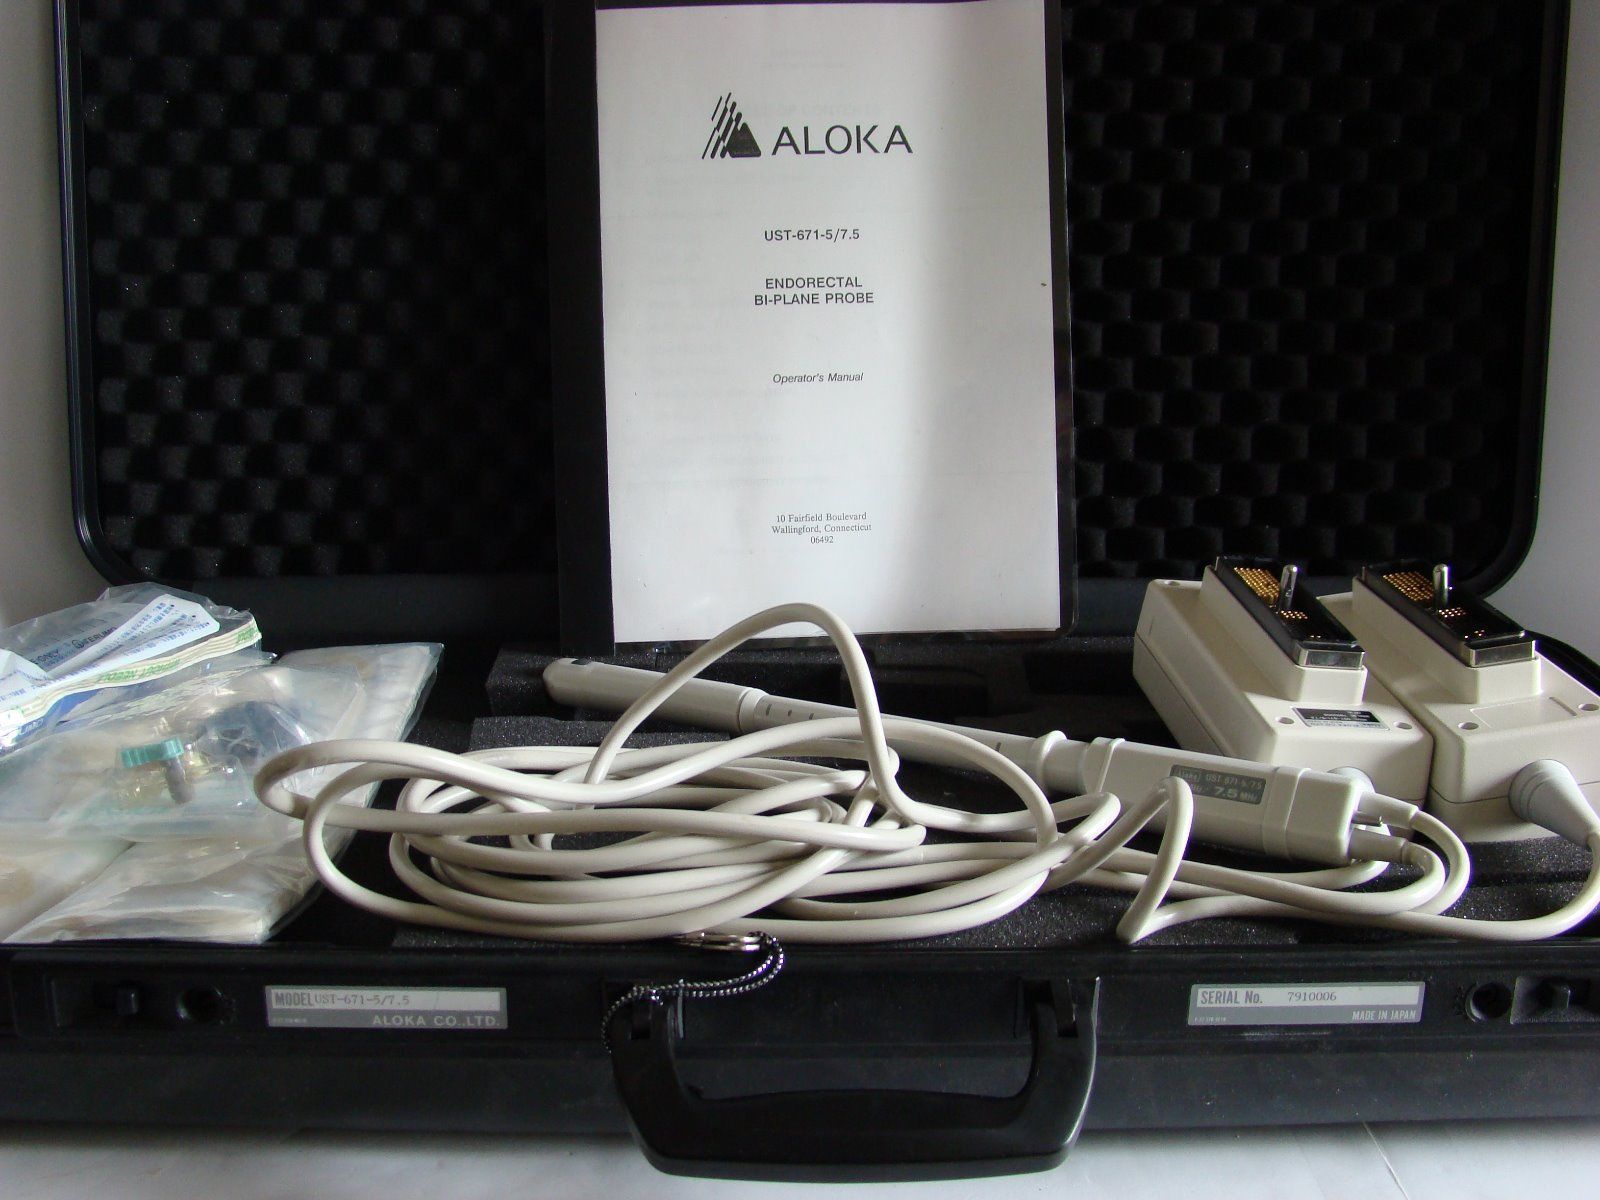 ultrasound-probe aloka ust-671-5-7/5 DIAGNOSTIC ULTRASOUND MACHINES FOR SALE